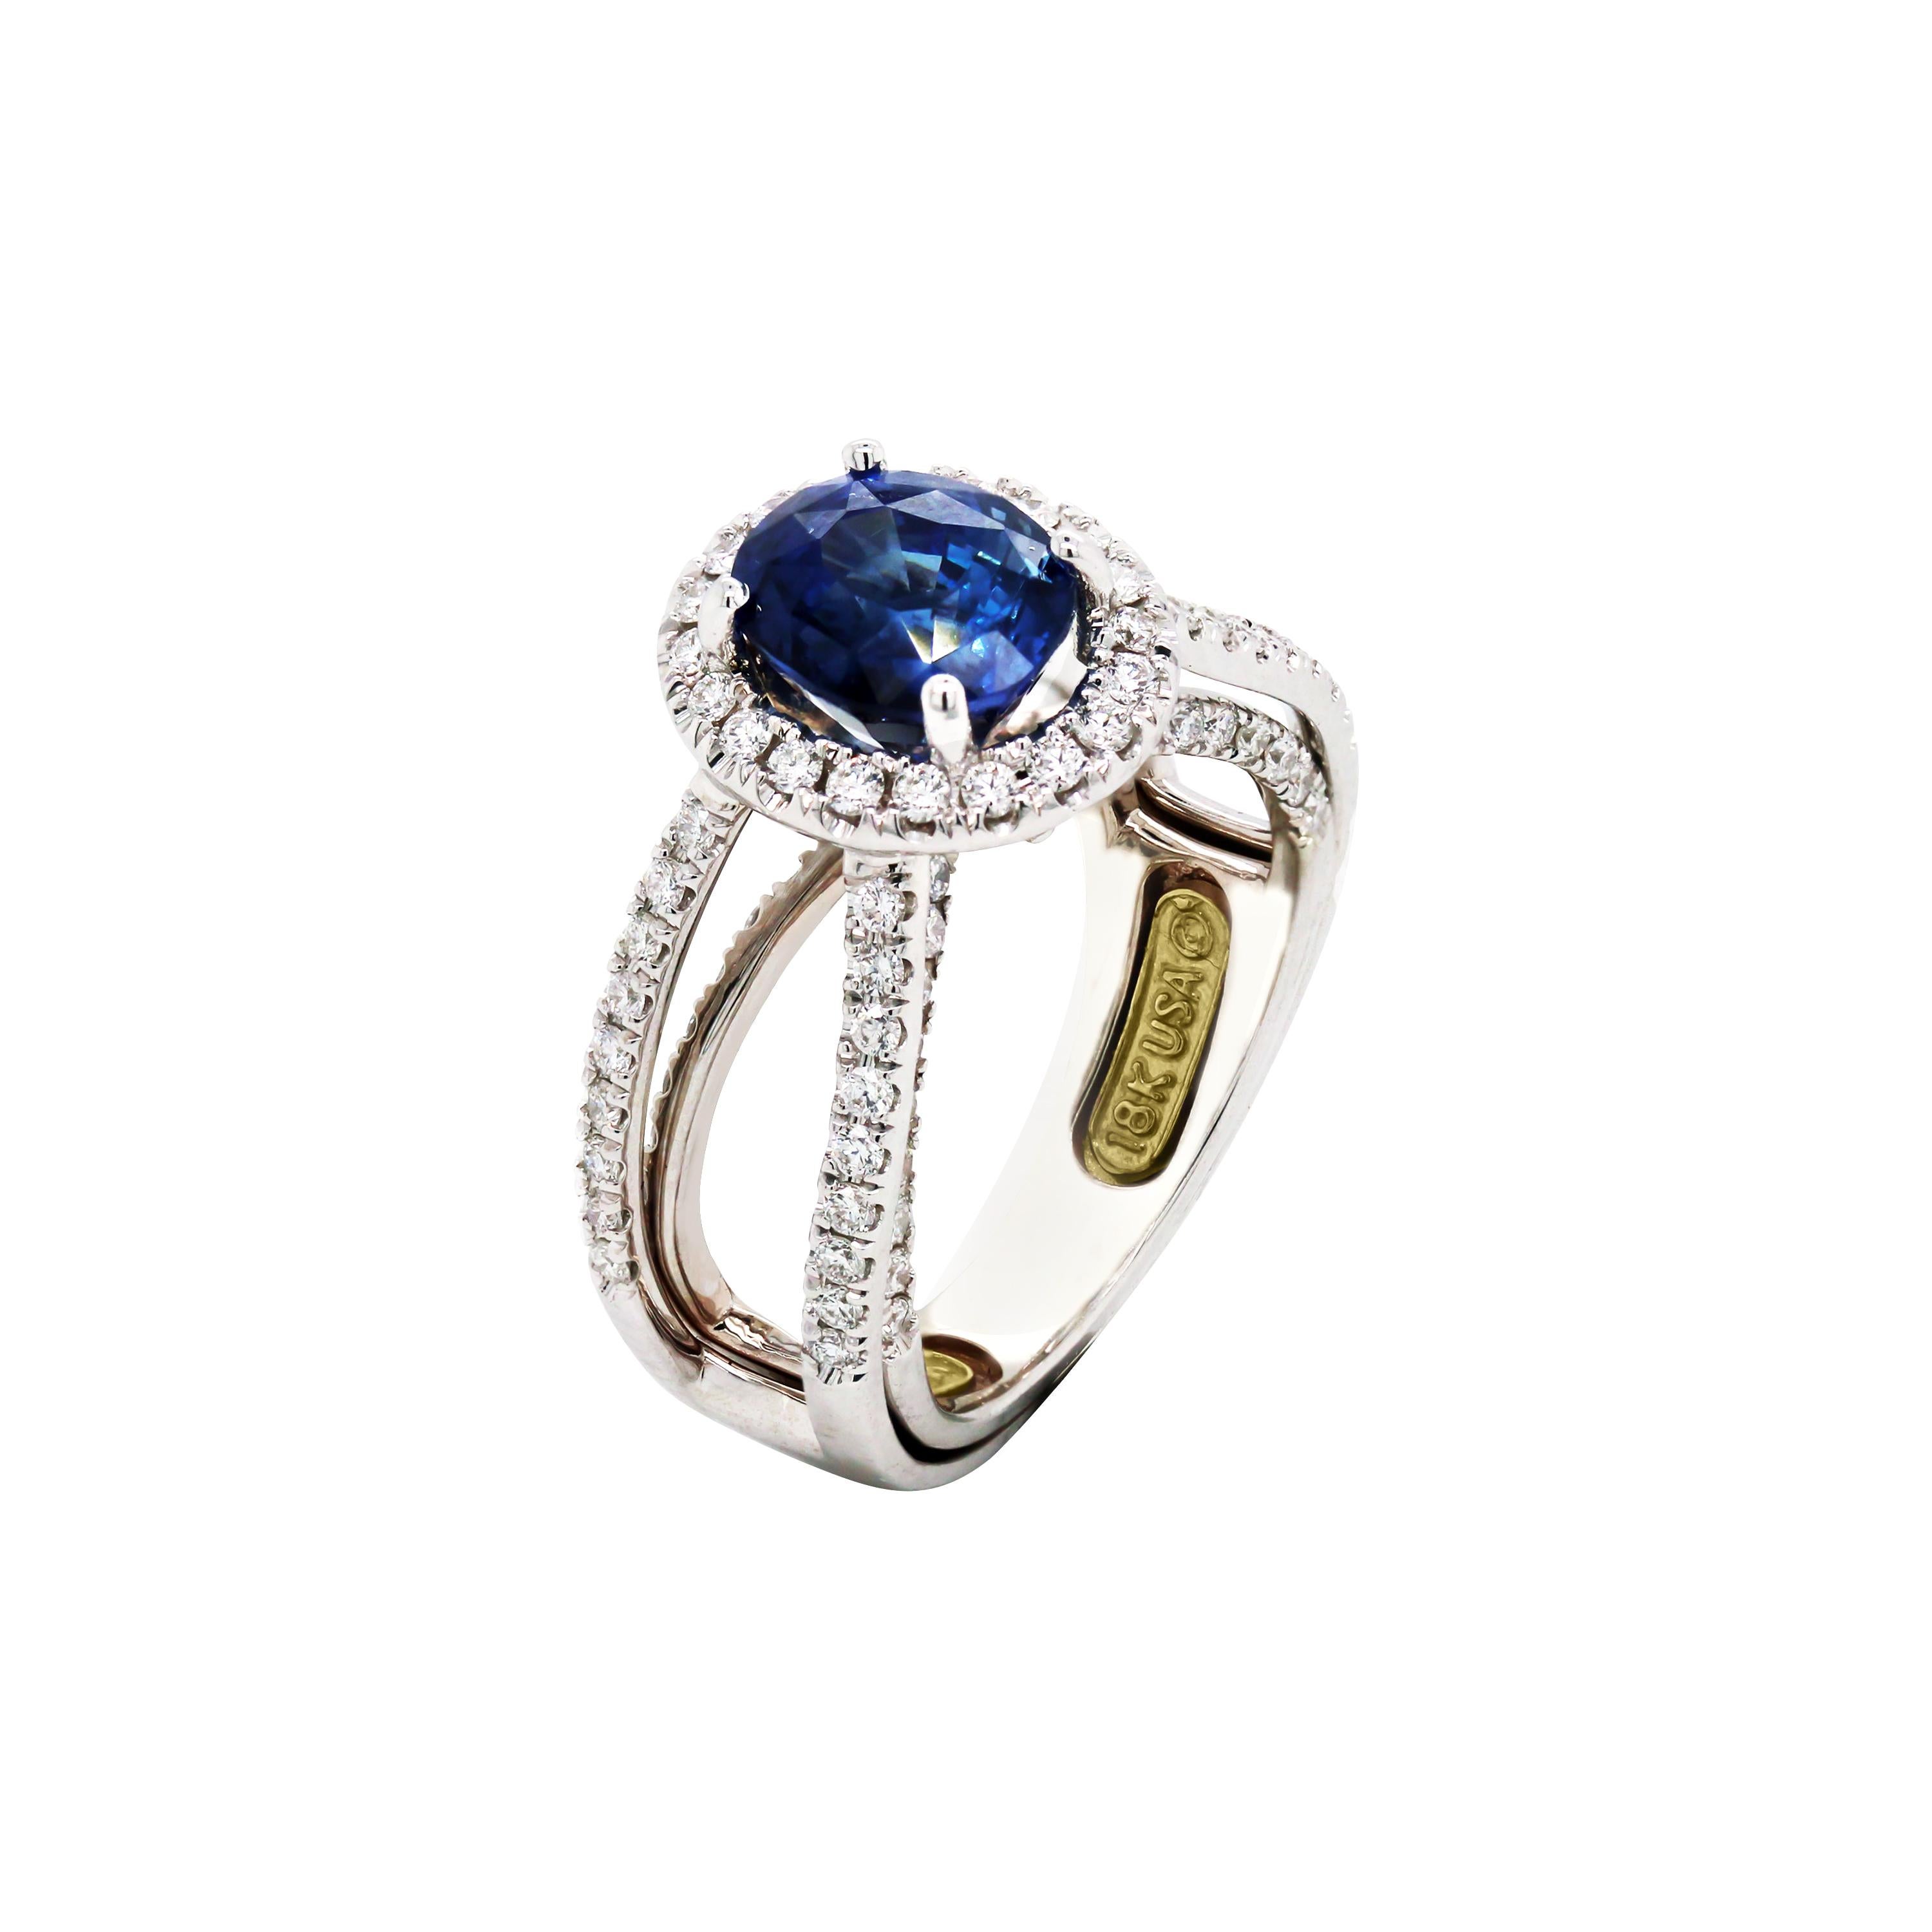 Stambolian 3.48 Carat Oval Blue Sapphire 18K White Gold Diamond Cocktail Ring